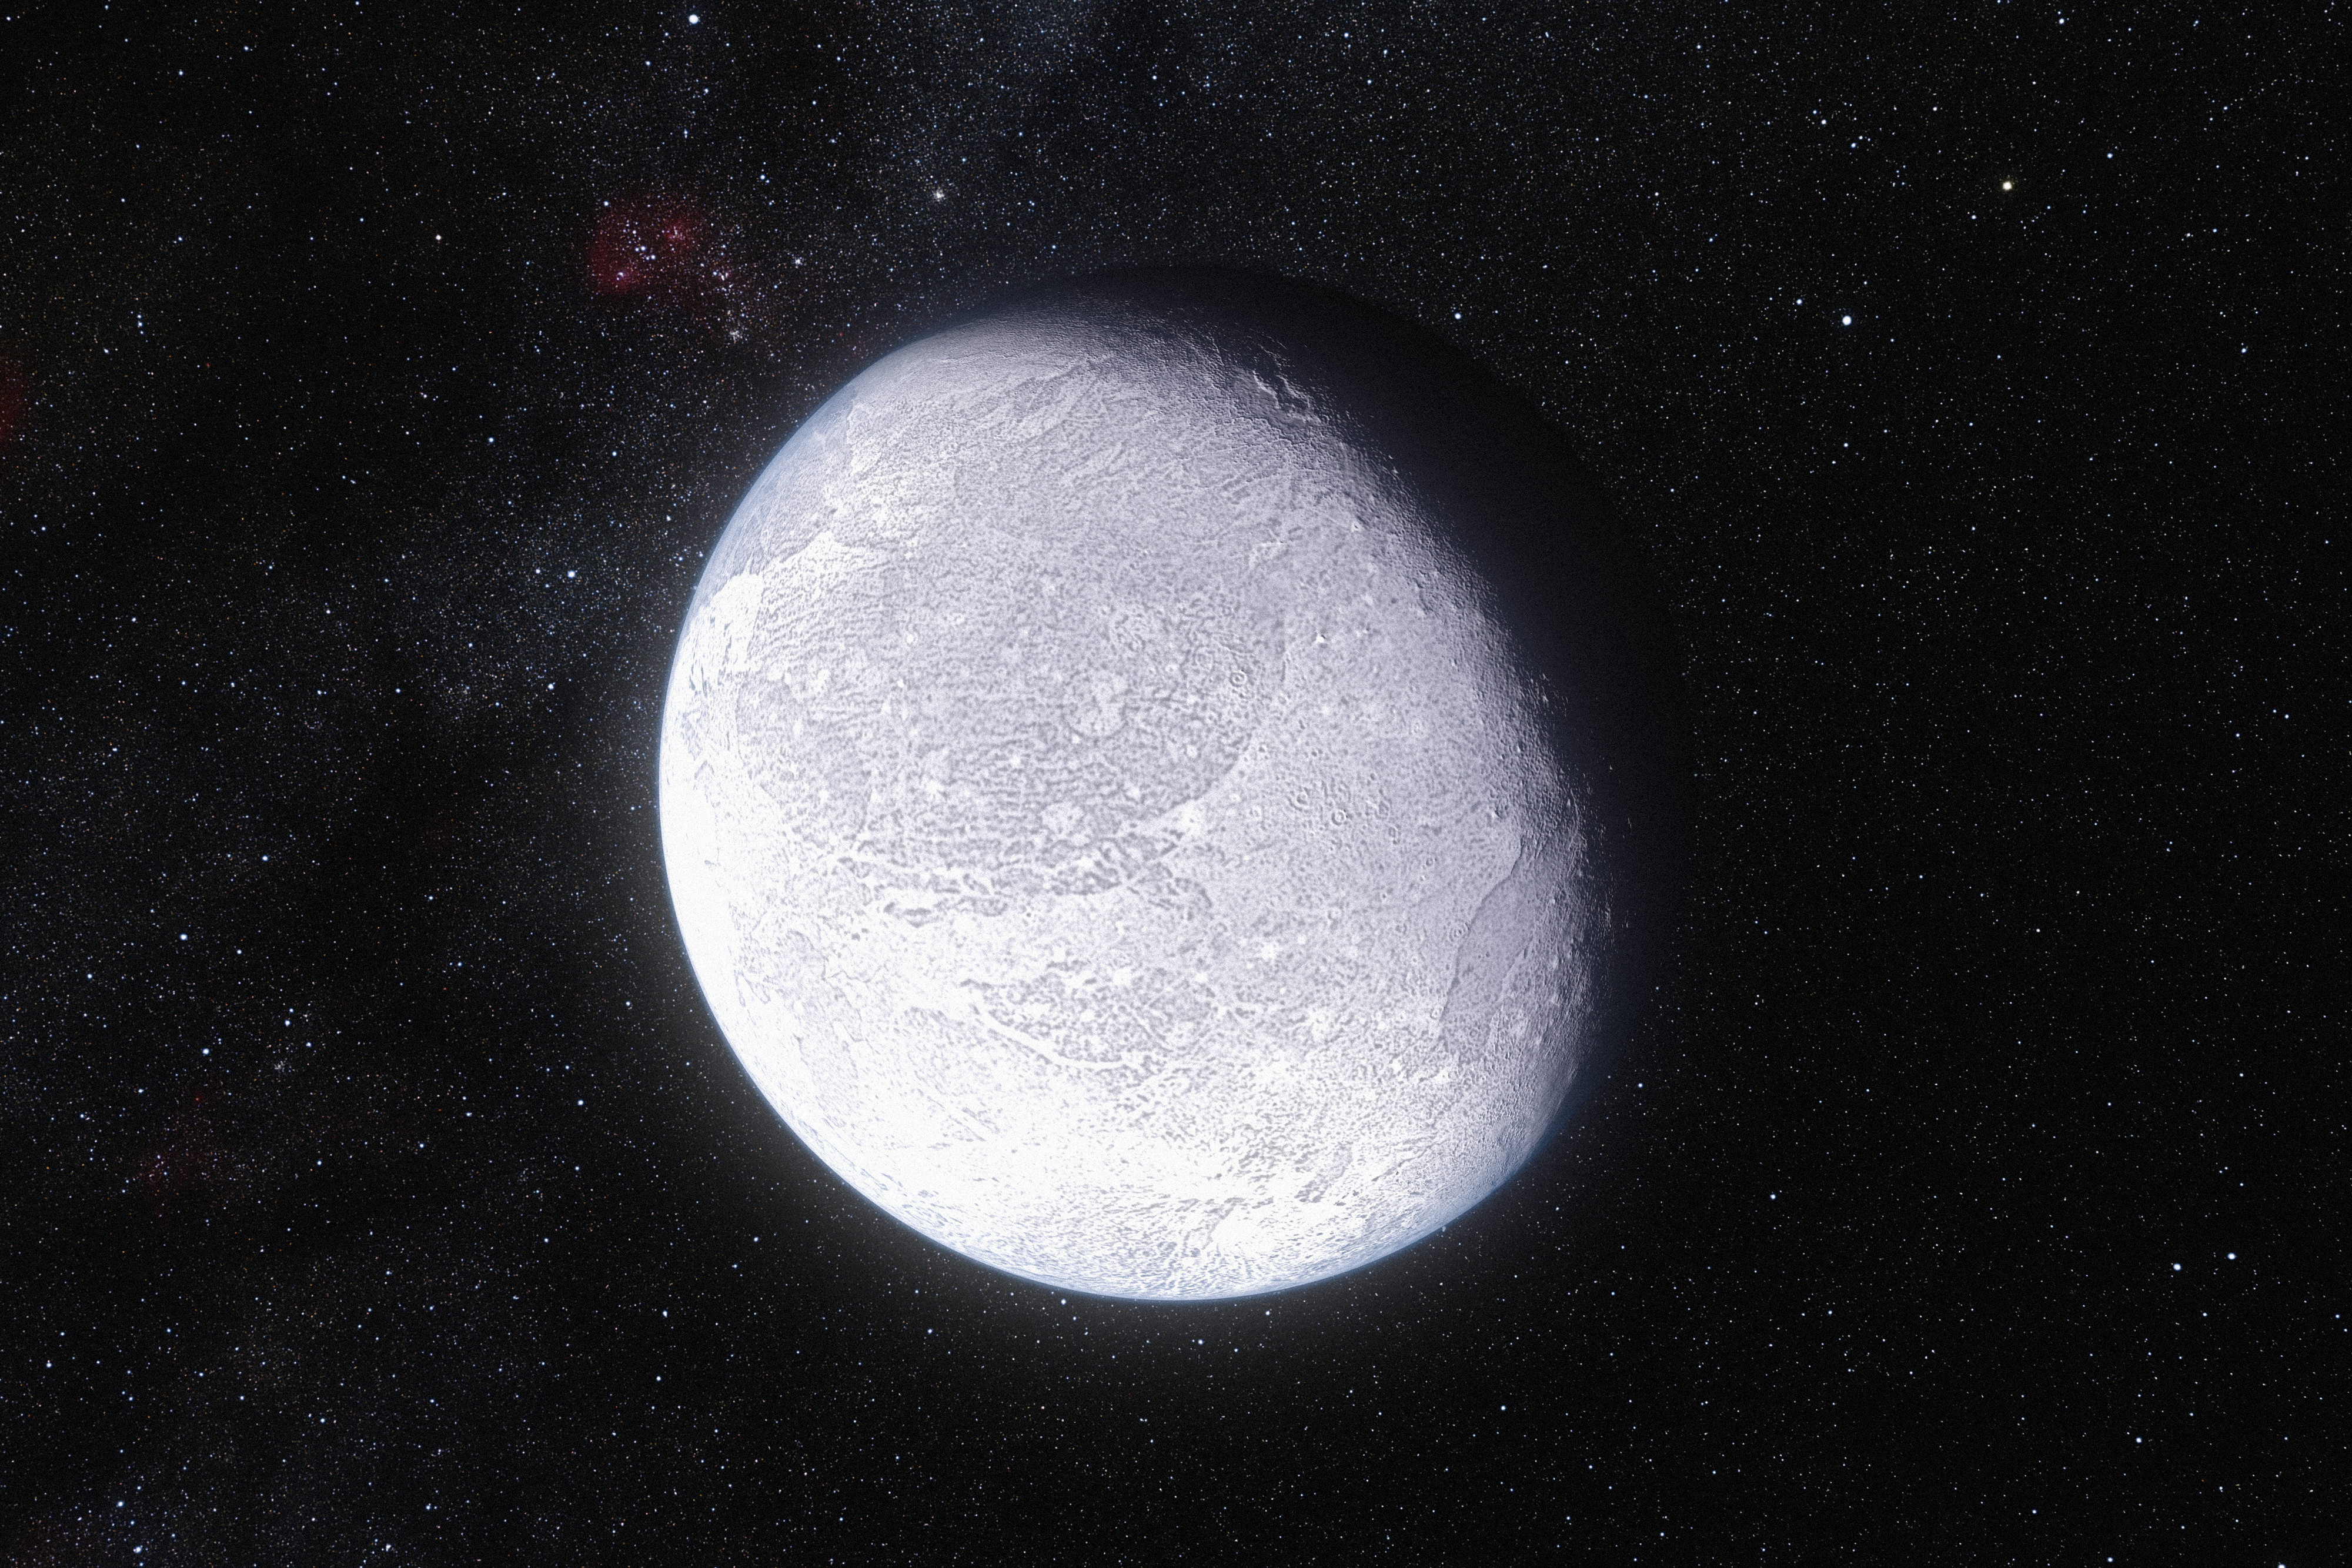 Artist’s impression of the dwarf planet Eris.